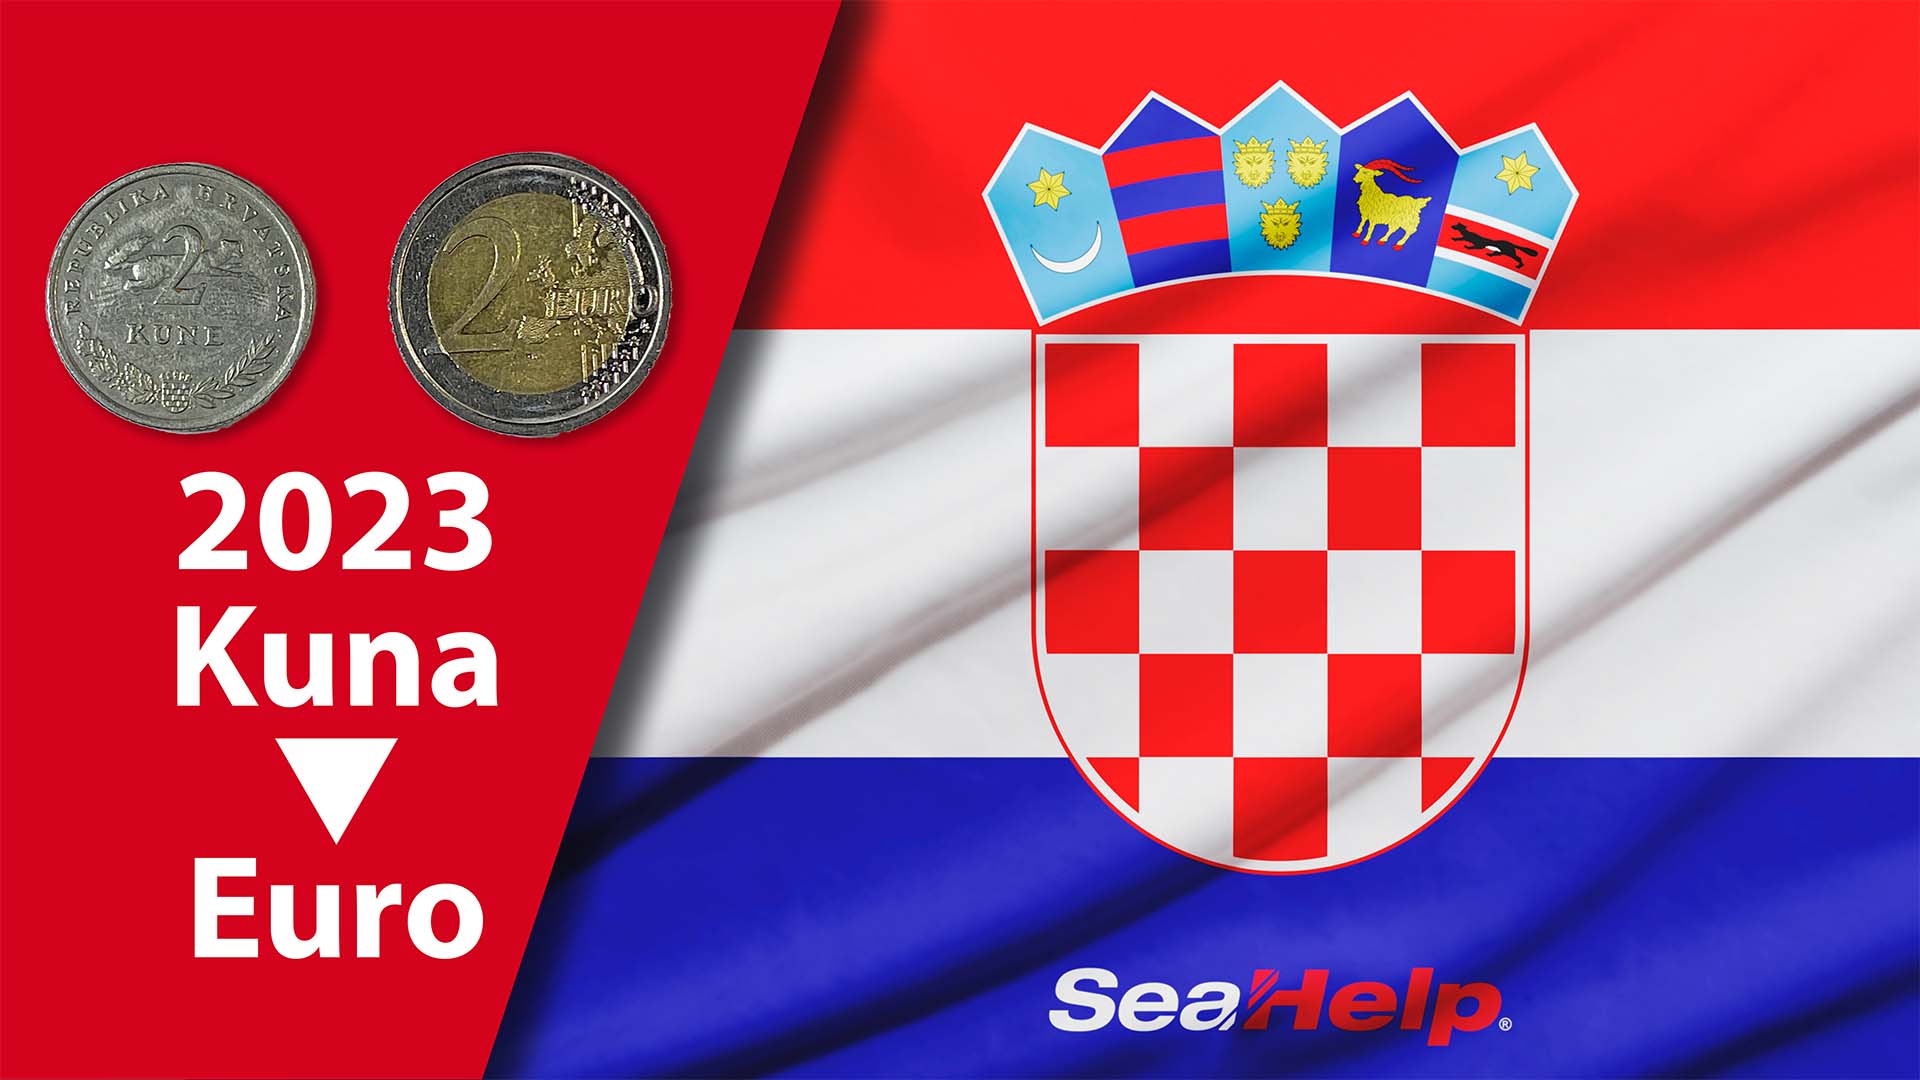 Convert 1 EUR to HRK - Euro to Croatian Kuna Currency Converter